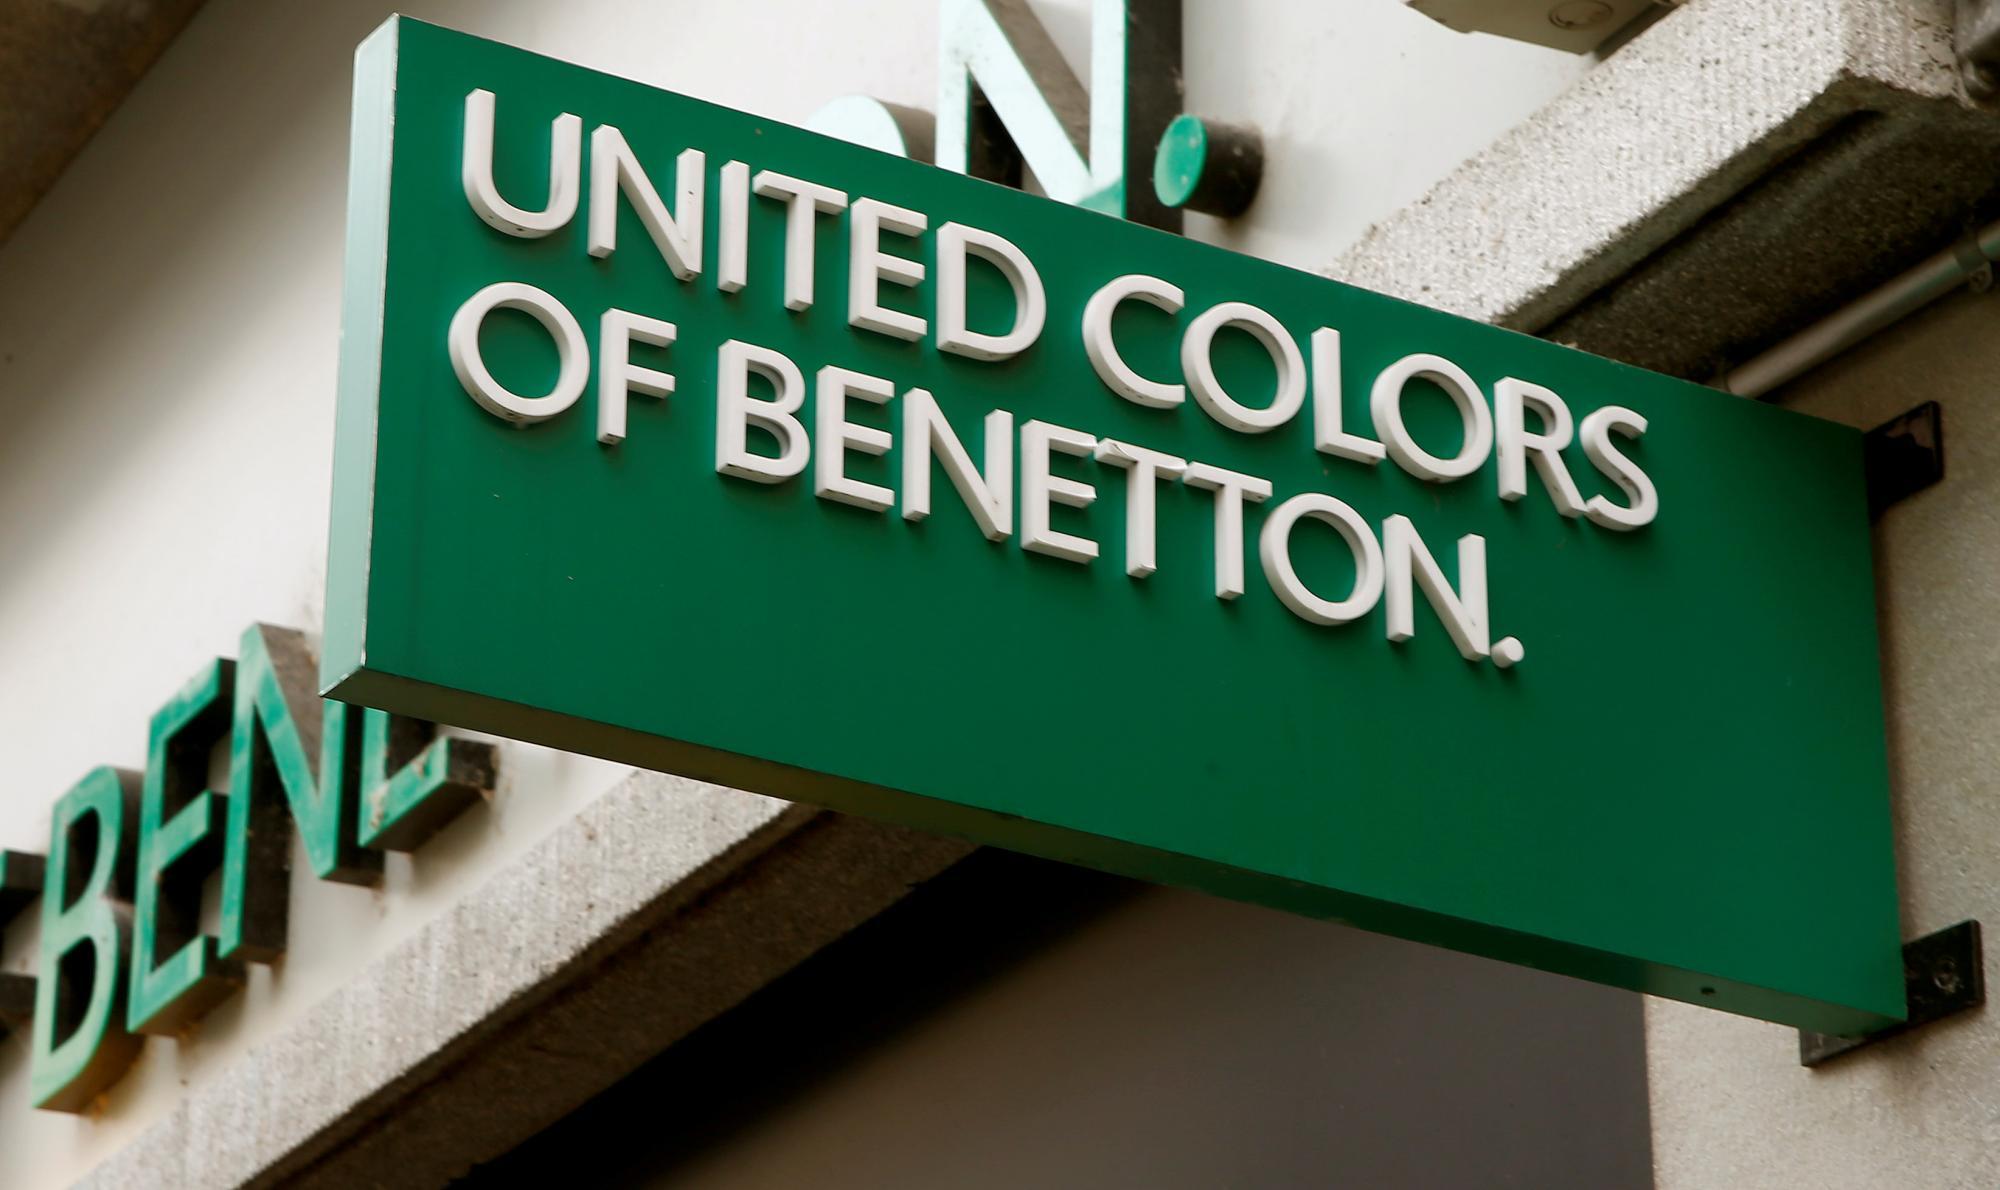 Firmengründer Luciano Benetton verlässt Konzernführung im Streit